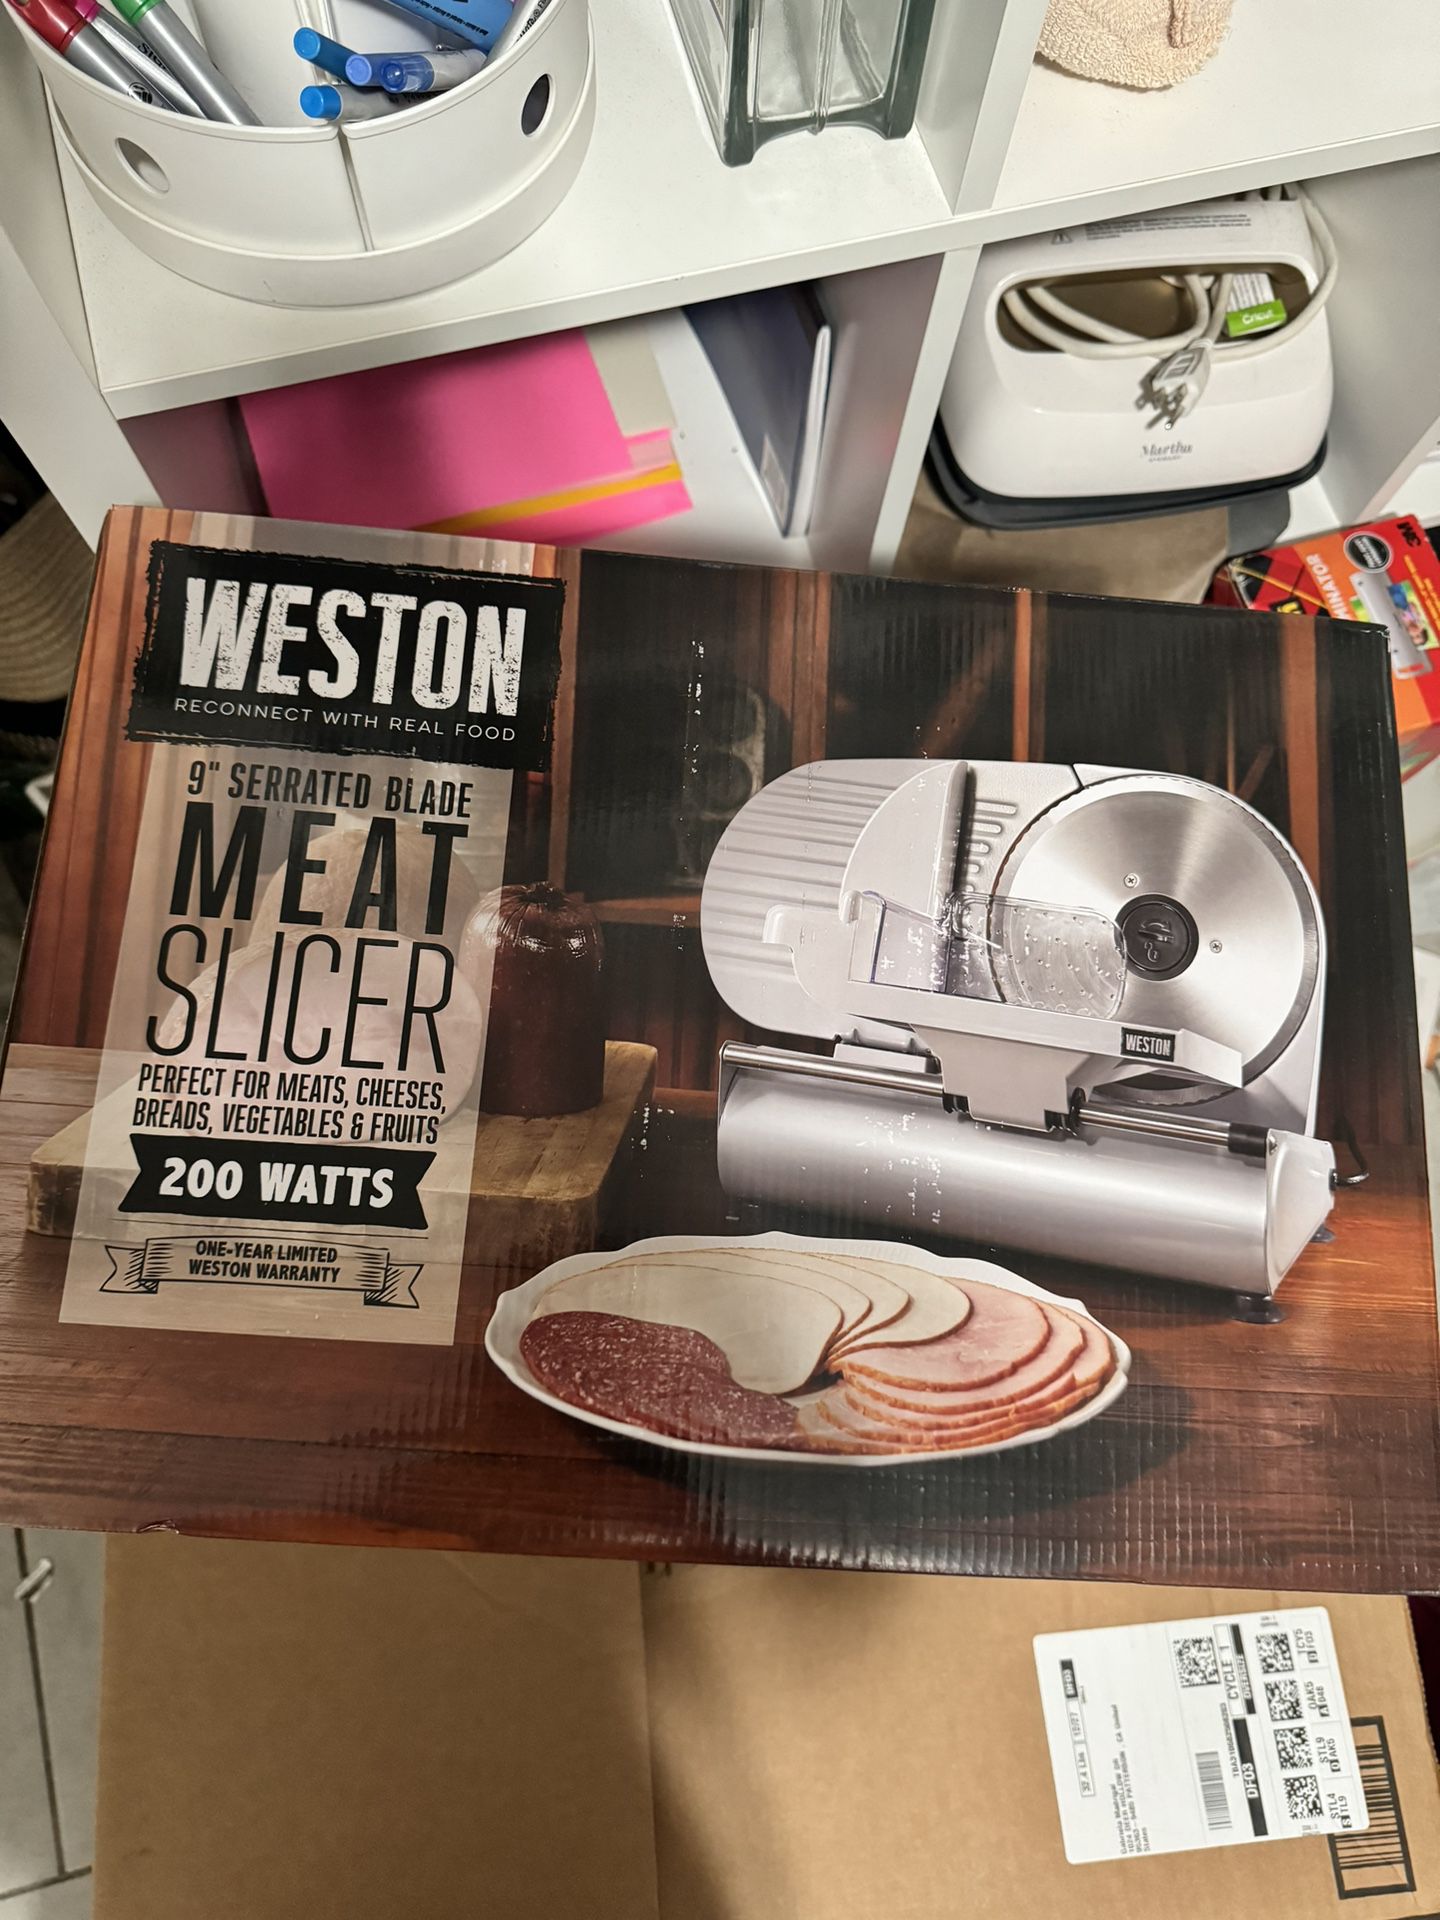 Weston Electric Meat Slicer 